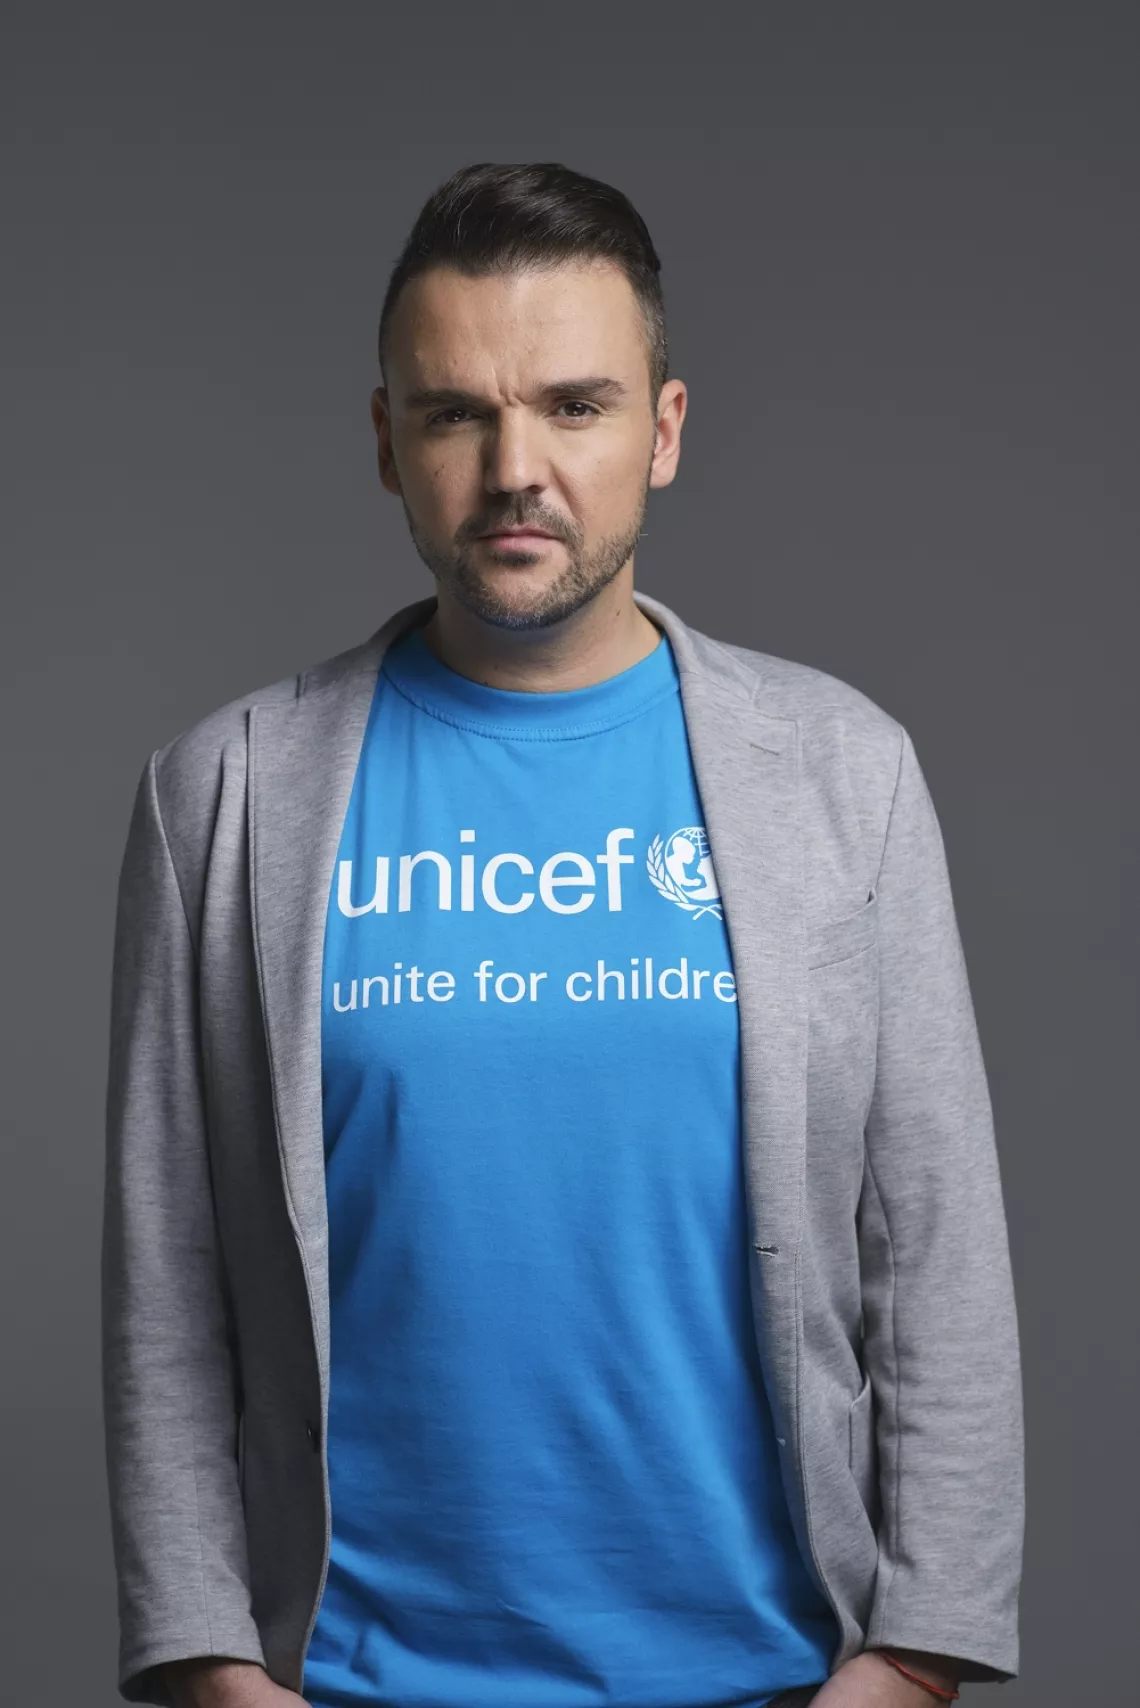 Vladimir Ampiv-Grafa, UNICEF Goodwill Ambassador in Bulgaria poses for a photo with UNICEF t-shirt. 